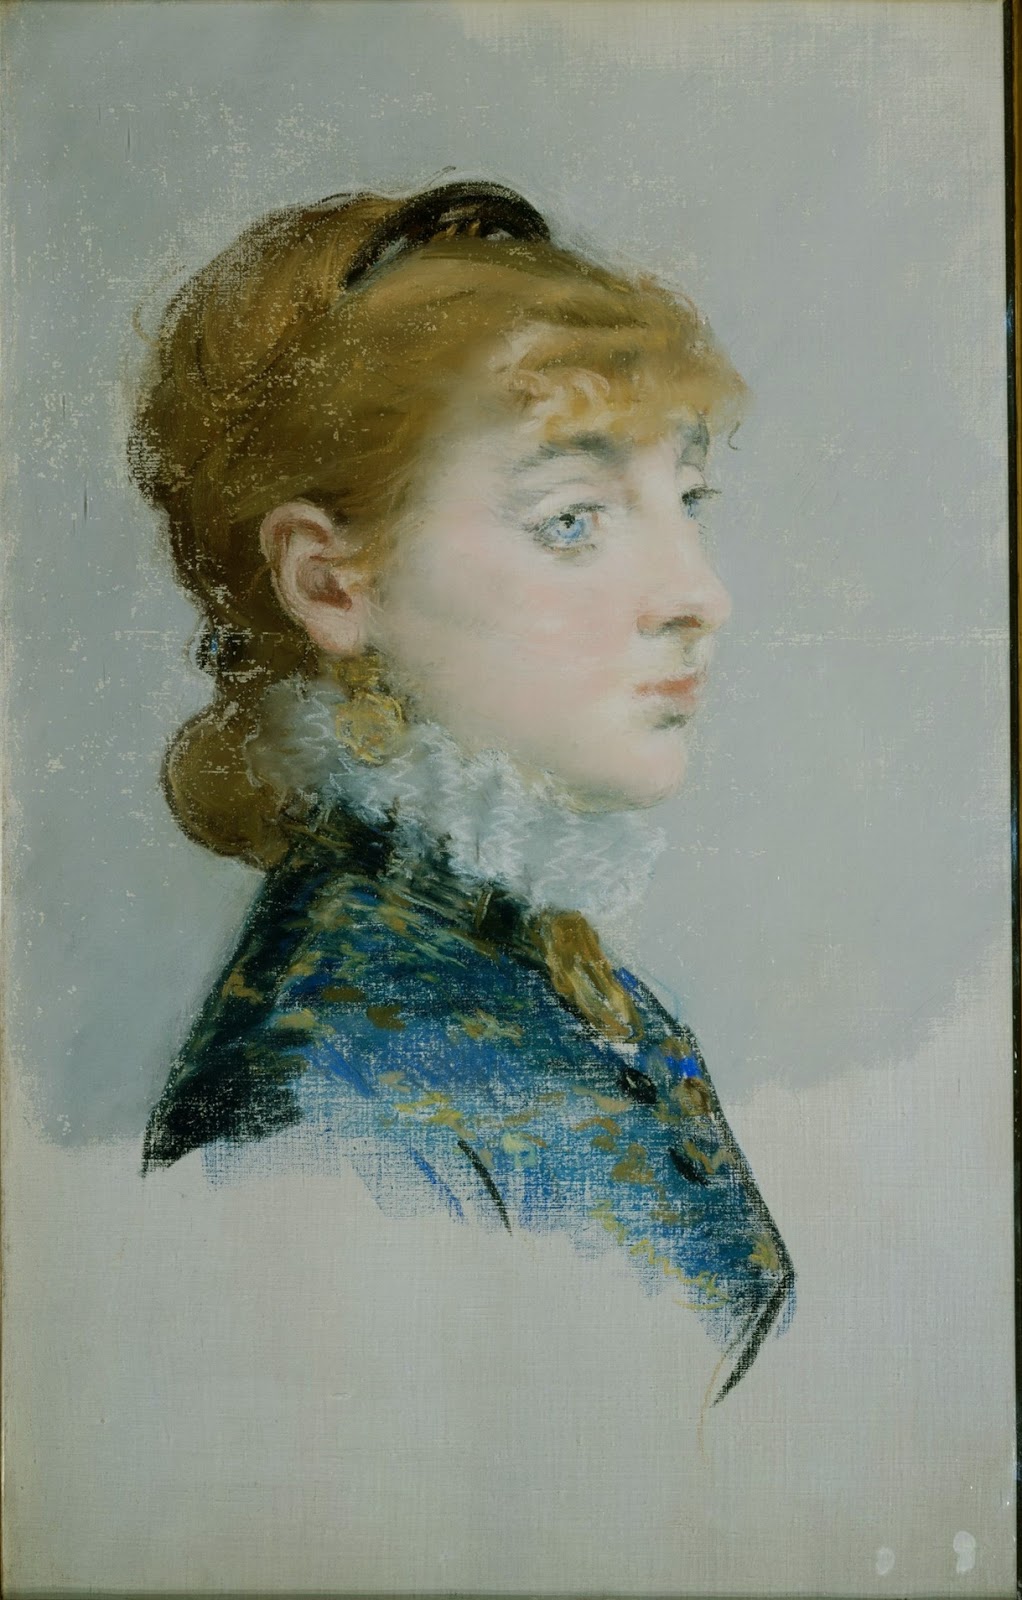 Edouard+Manet-1832-1883 (67).jpg